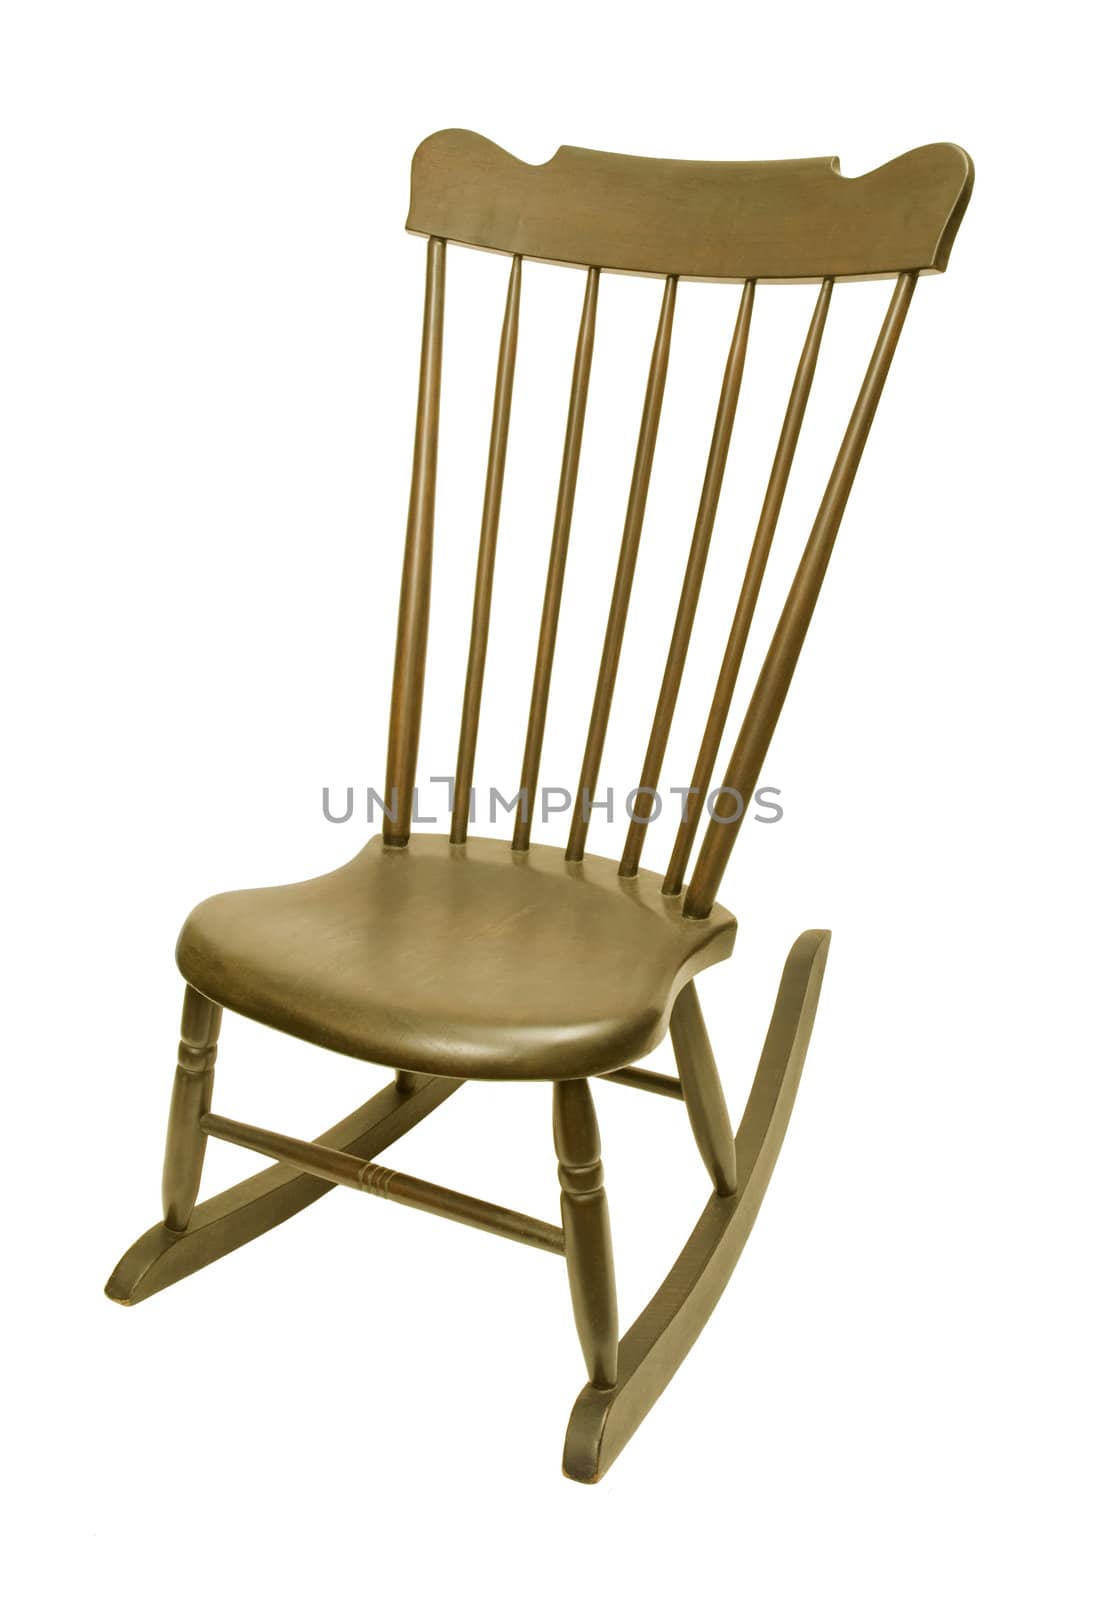 Vintage antique rocking chair against white background